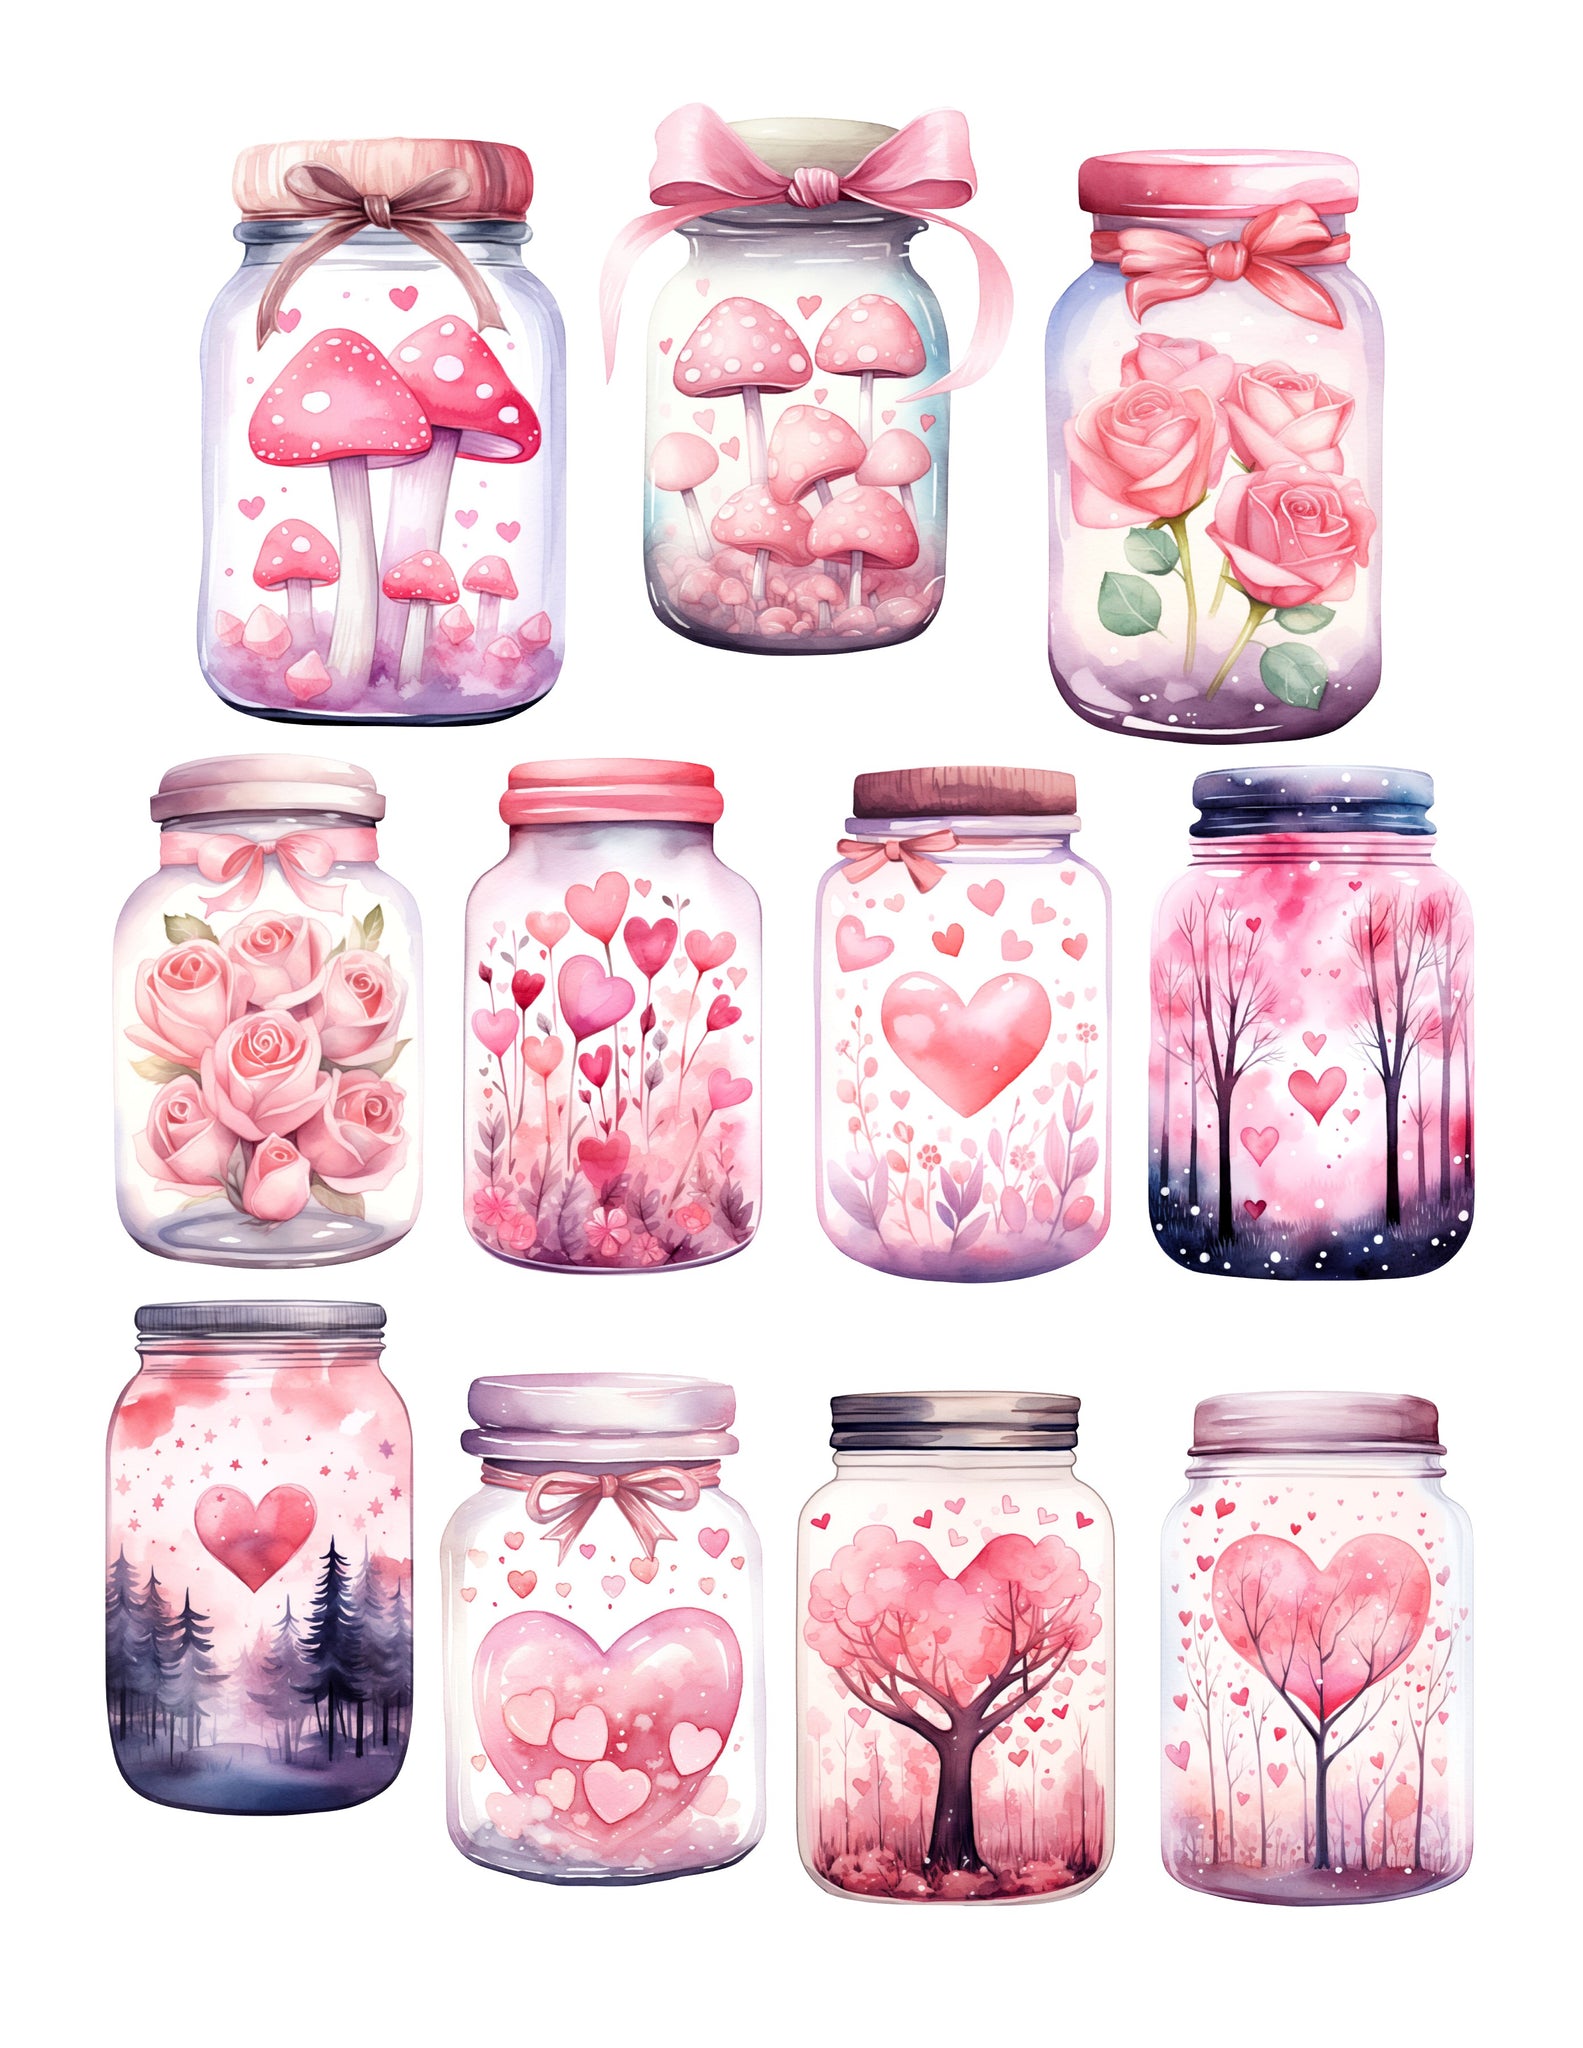 Heart Jars Ephemera